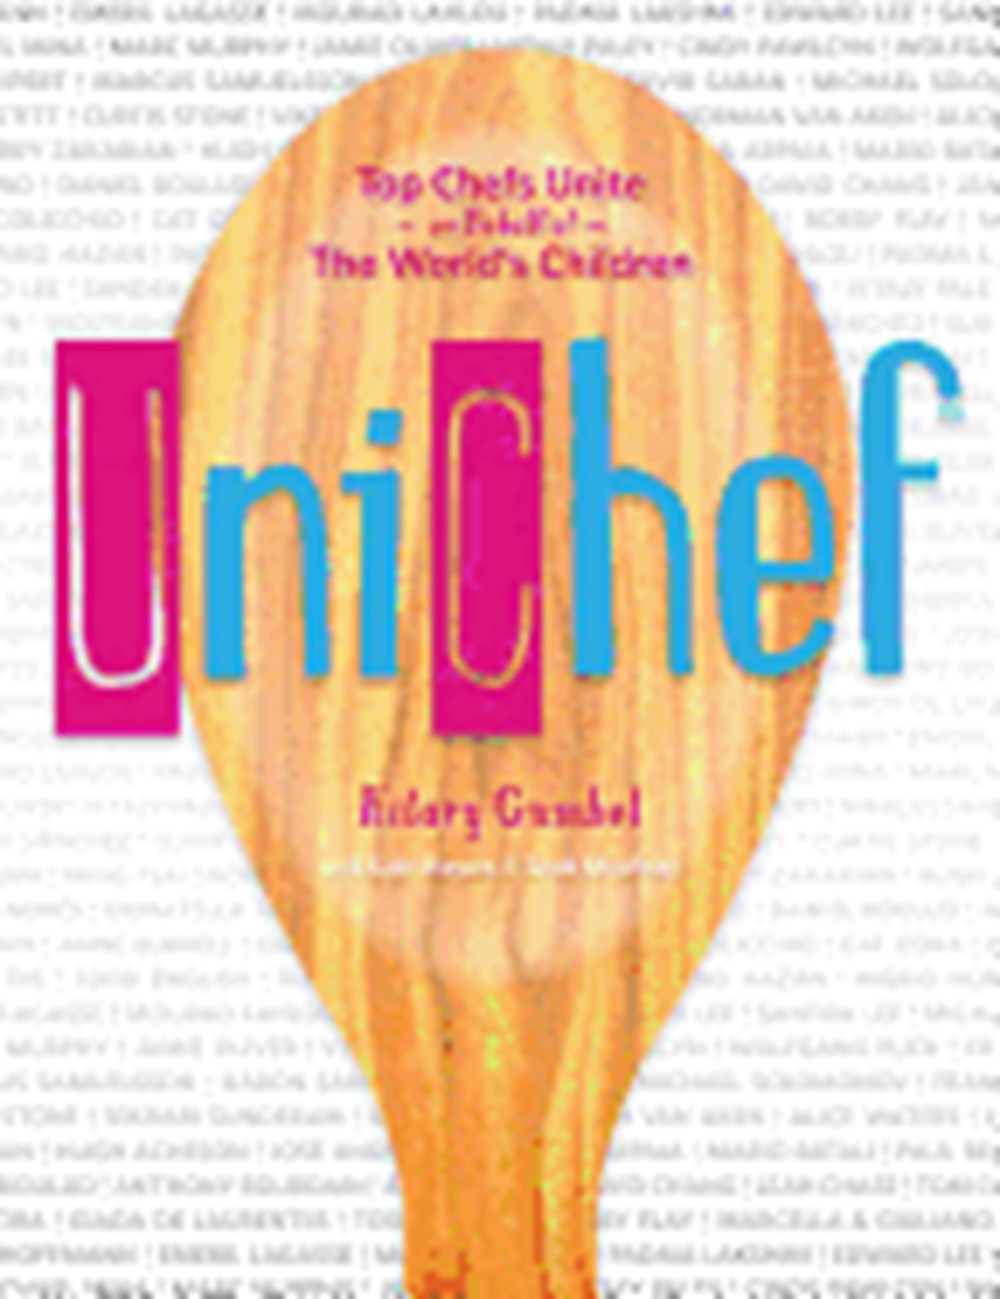 UniChef: Top Chefs Unite in Support of the World's Children